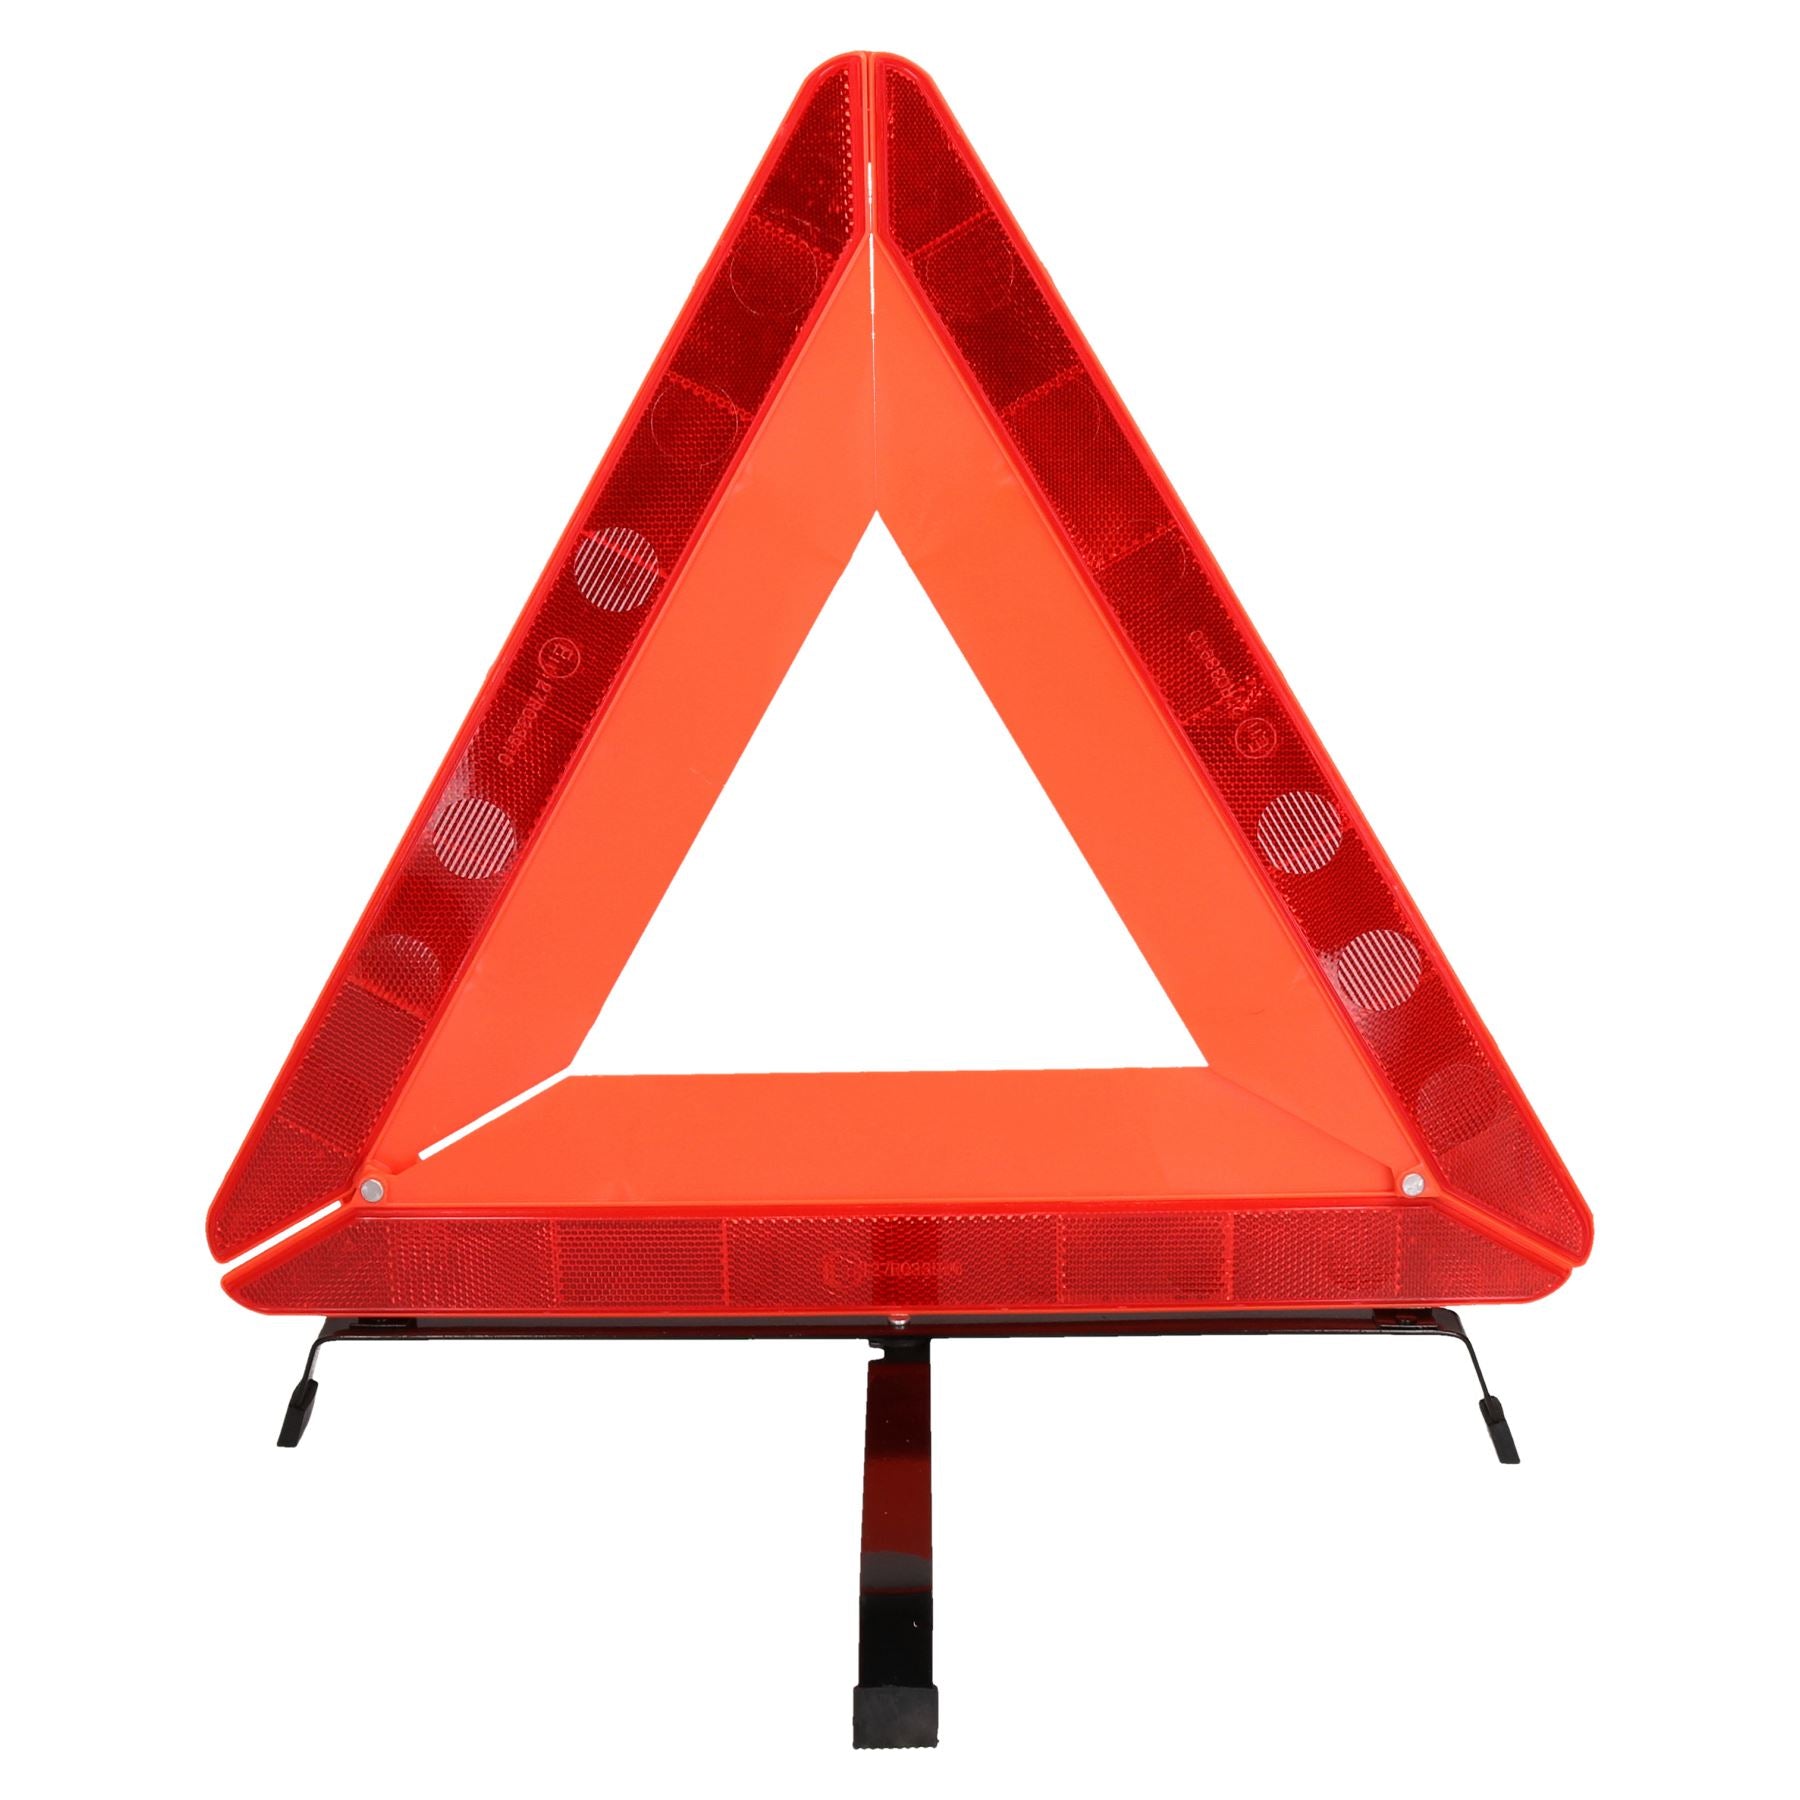 EU R27.03 Standard Large Reflective Warning Triangle Breakdown Hazard